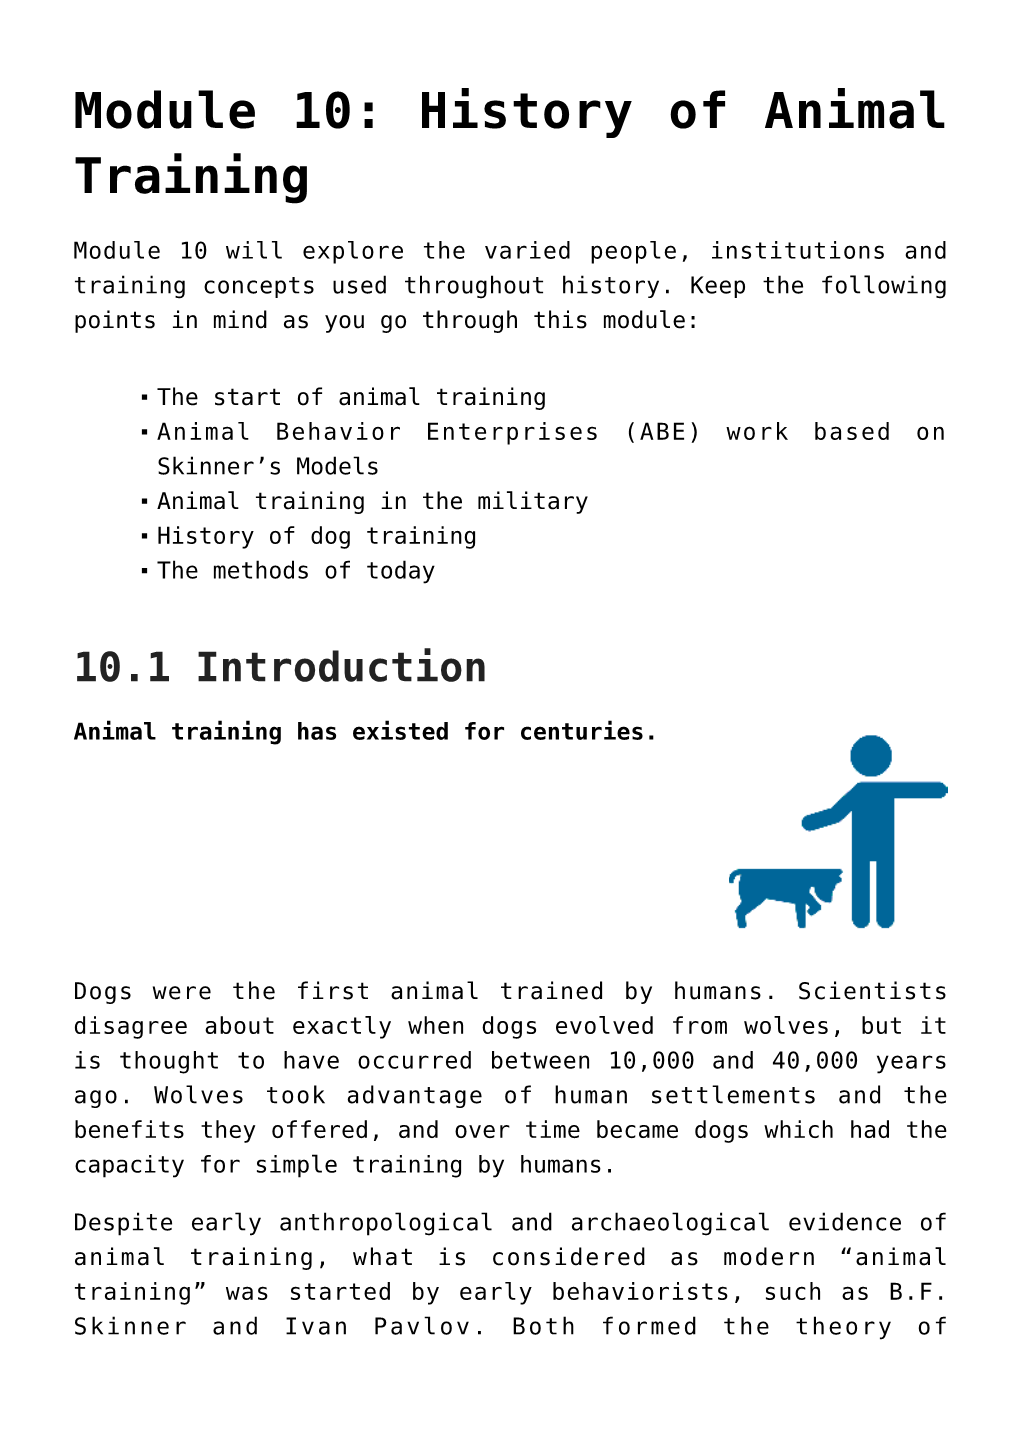 History of Animal Training